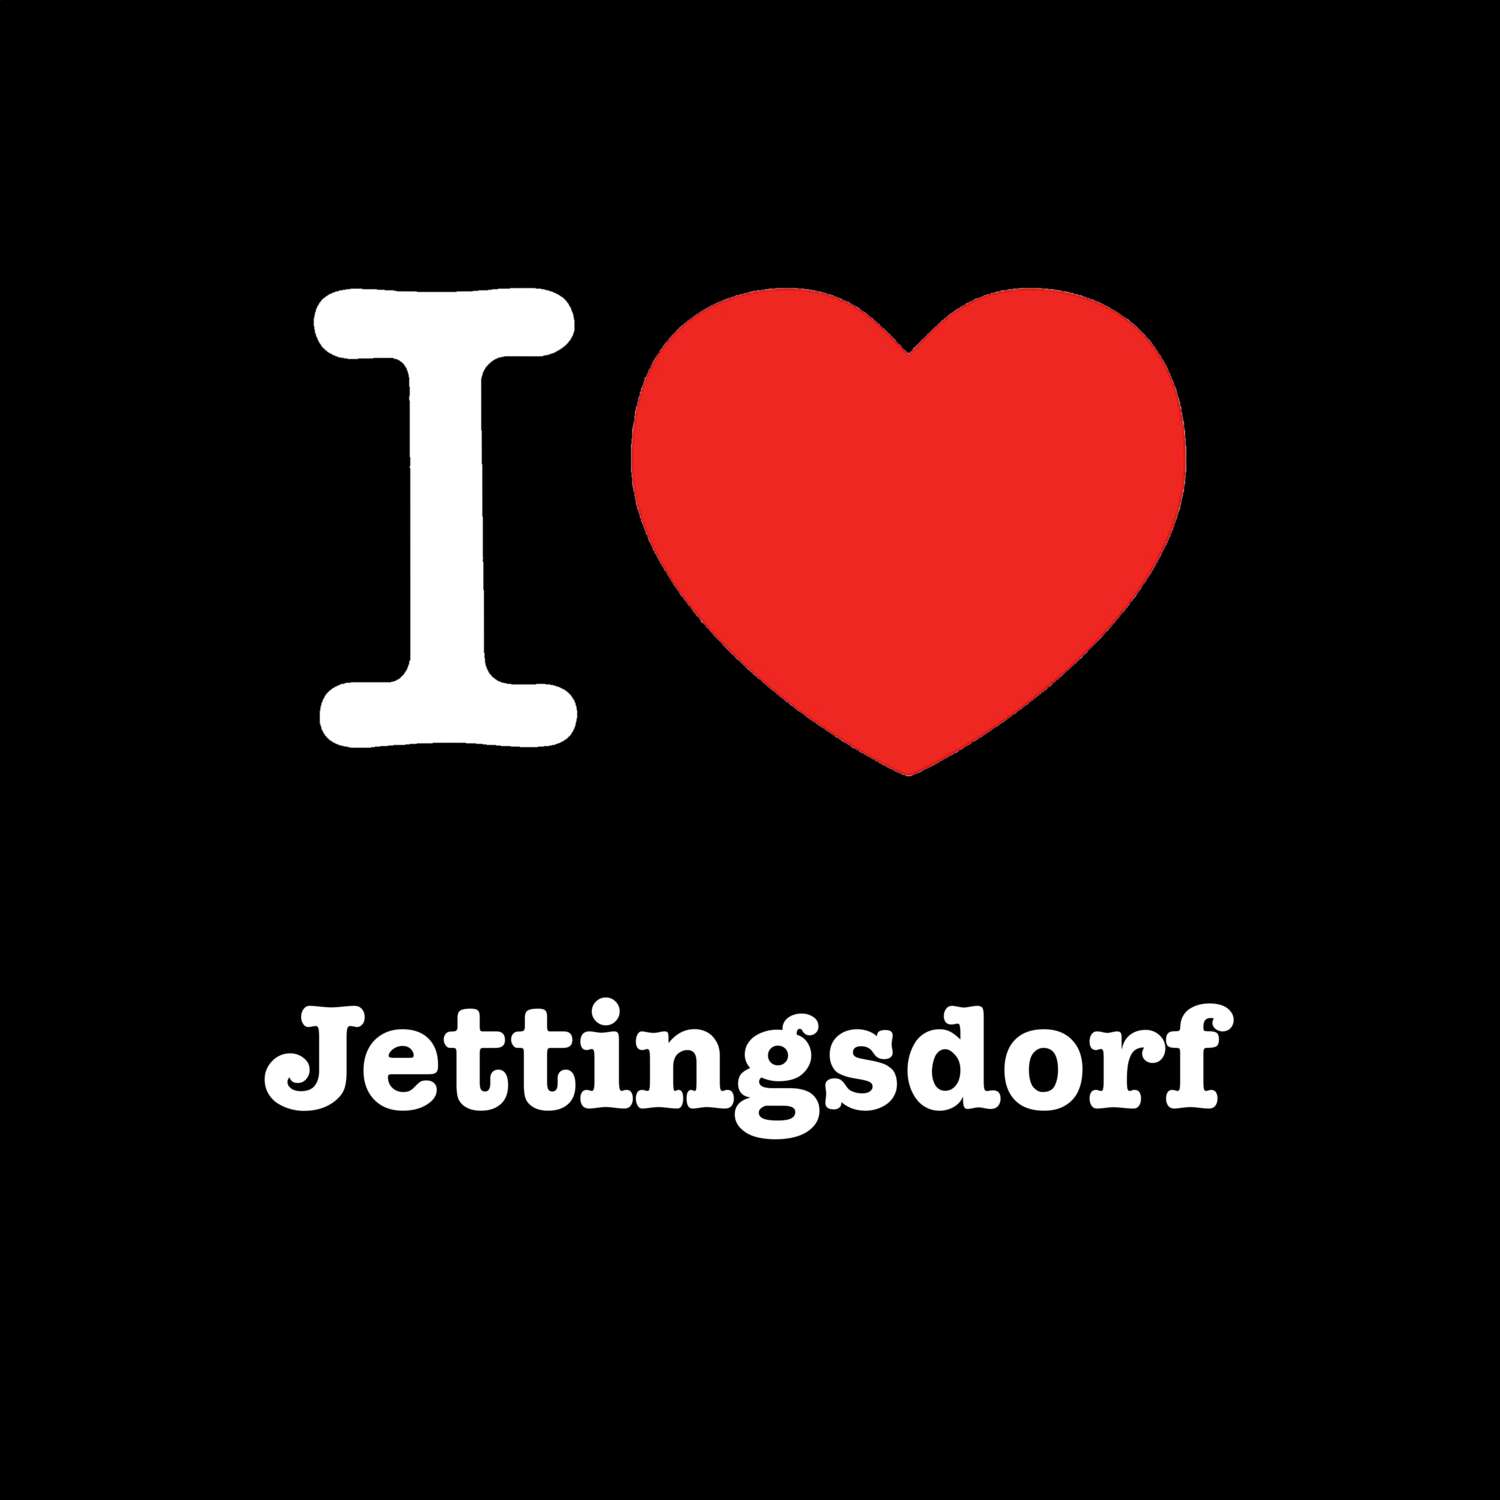 Jettingsdorf T-Shirt »I love«